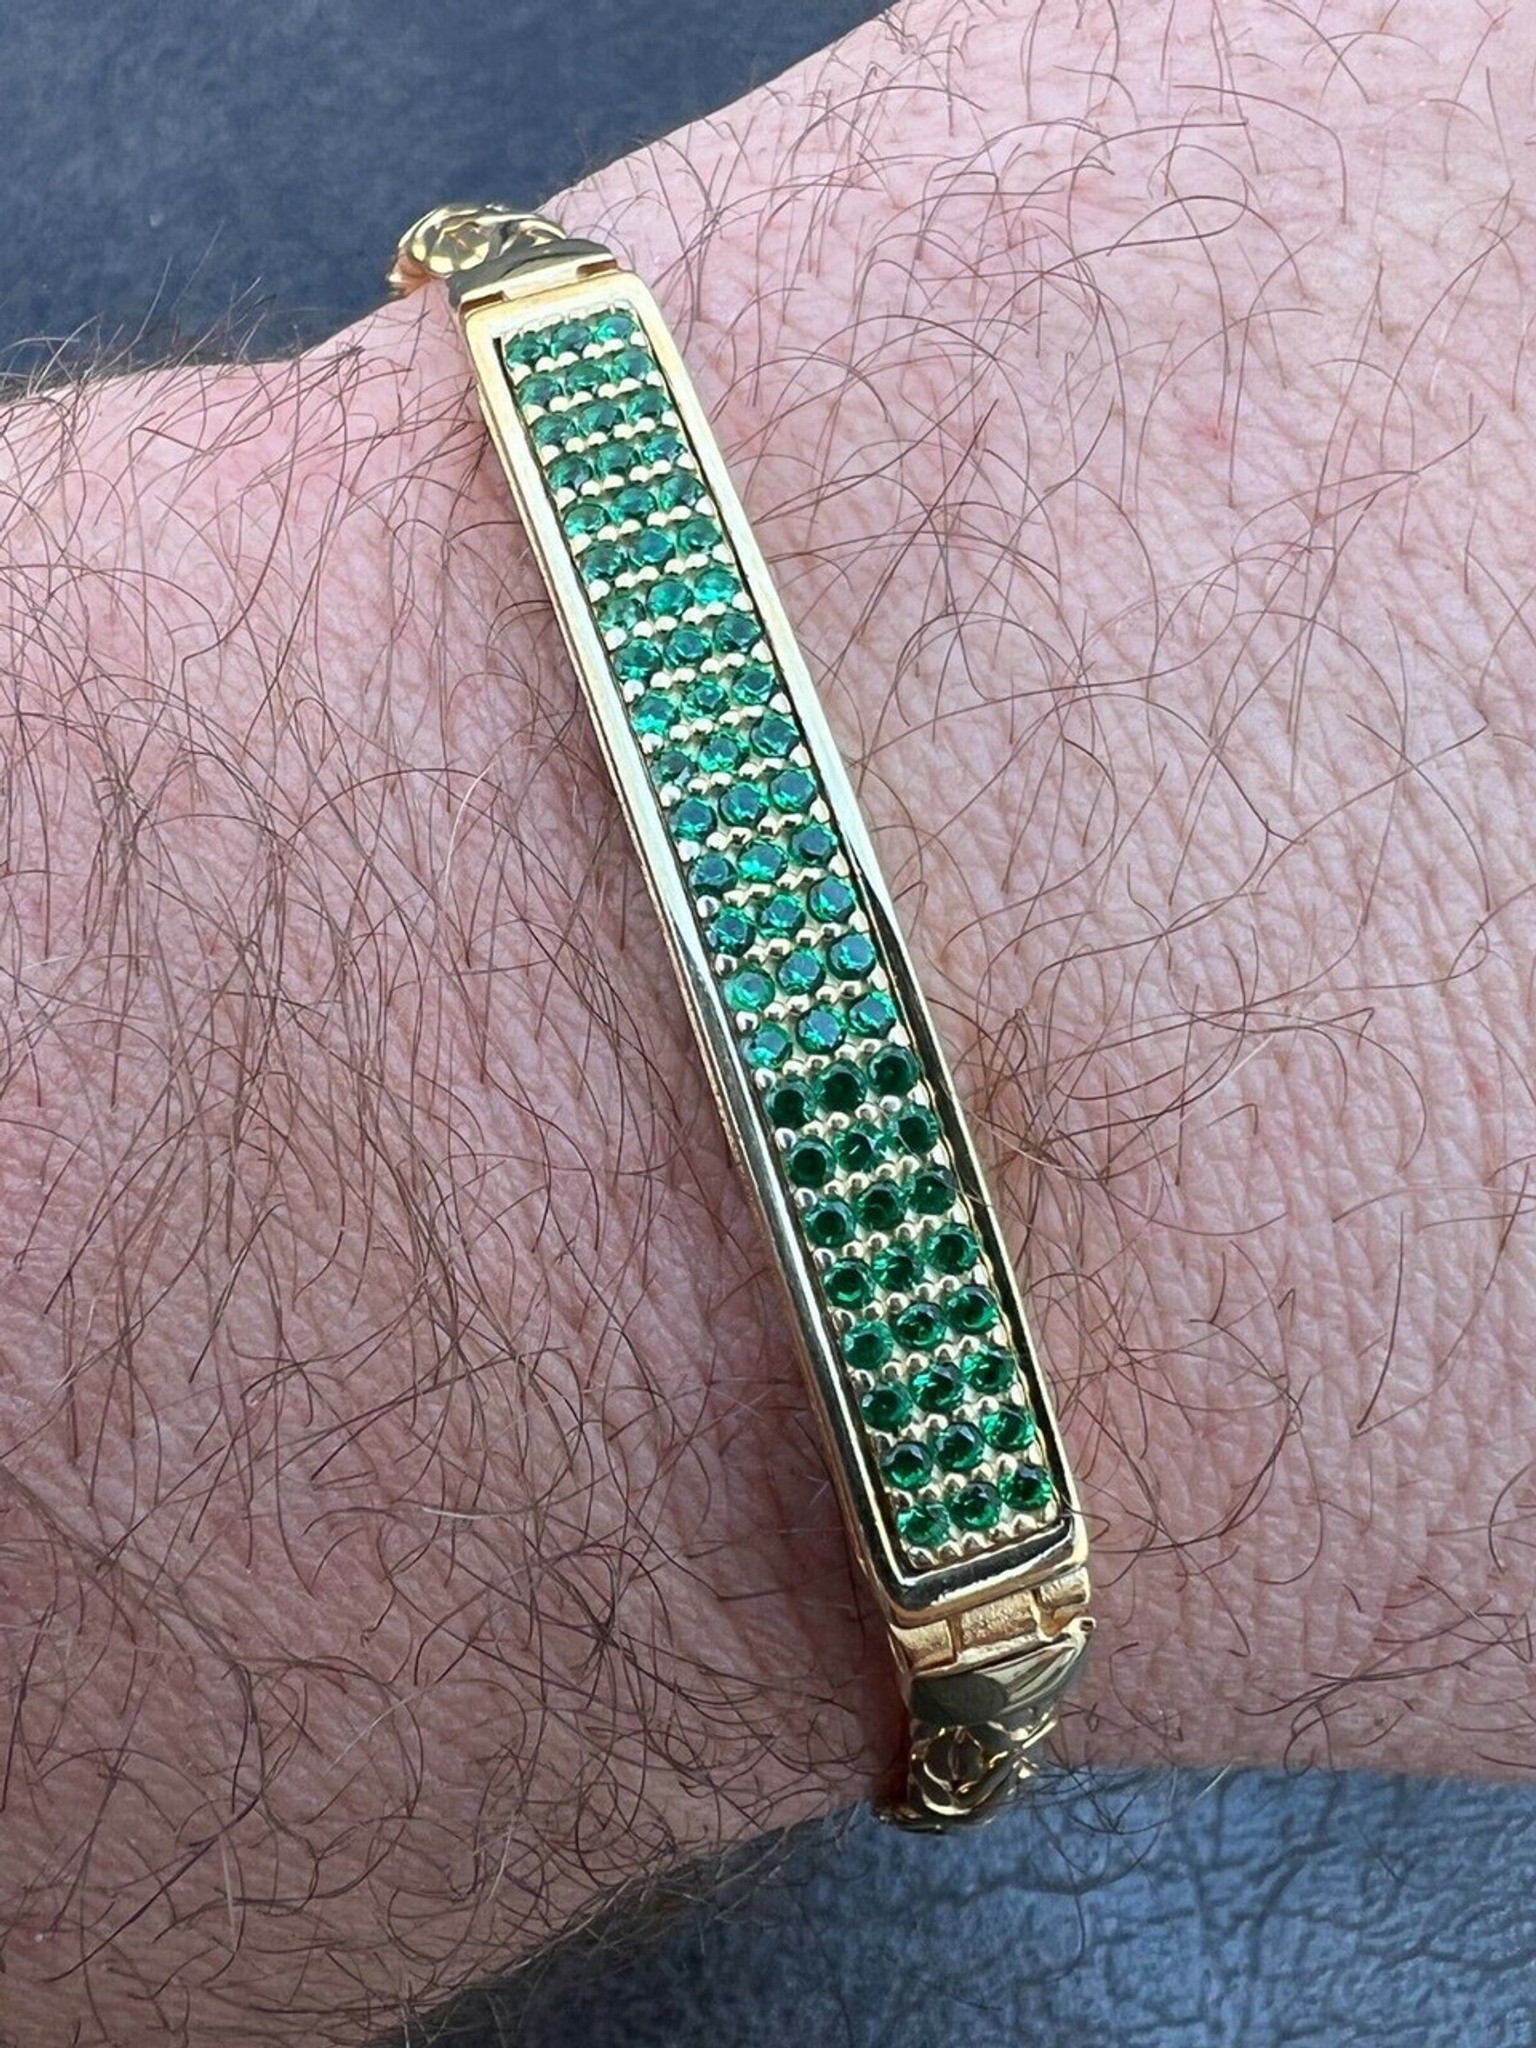 Buy REBUY Green Tiger Eye Bracelet Natural Crystal Healing Gemstone Bracelet  for Men & Women, Color Green, Bead Size 8 mm, Lab Certificate at Amazon.in